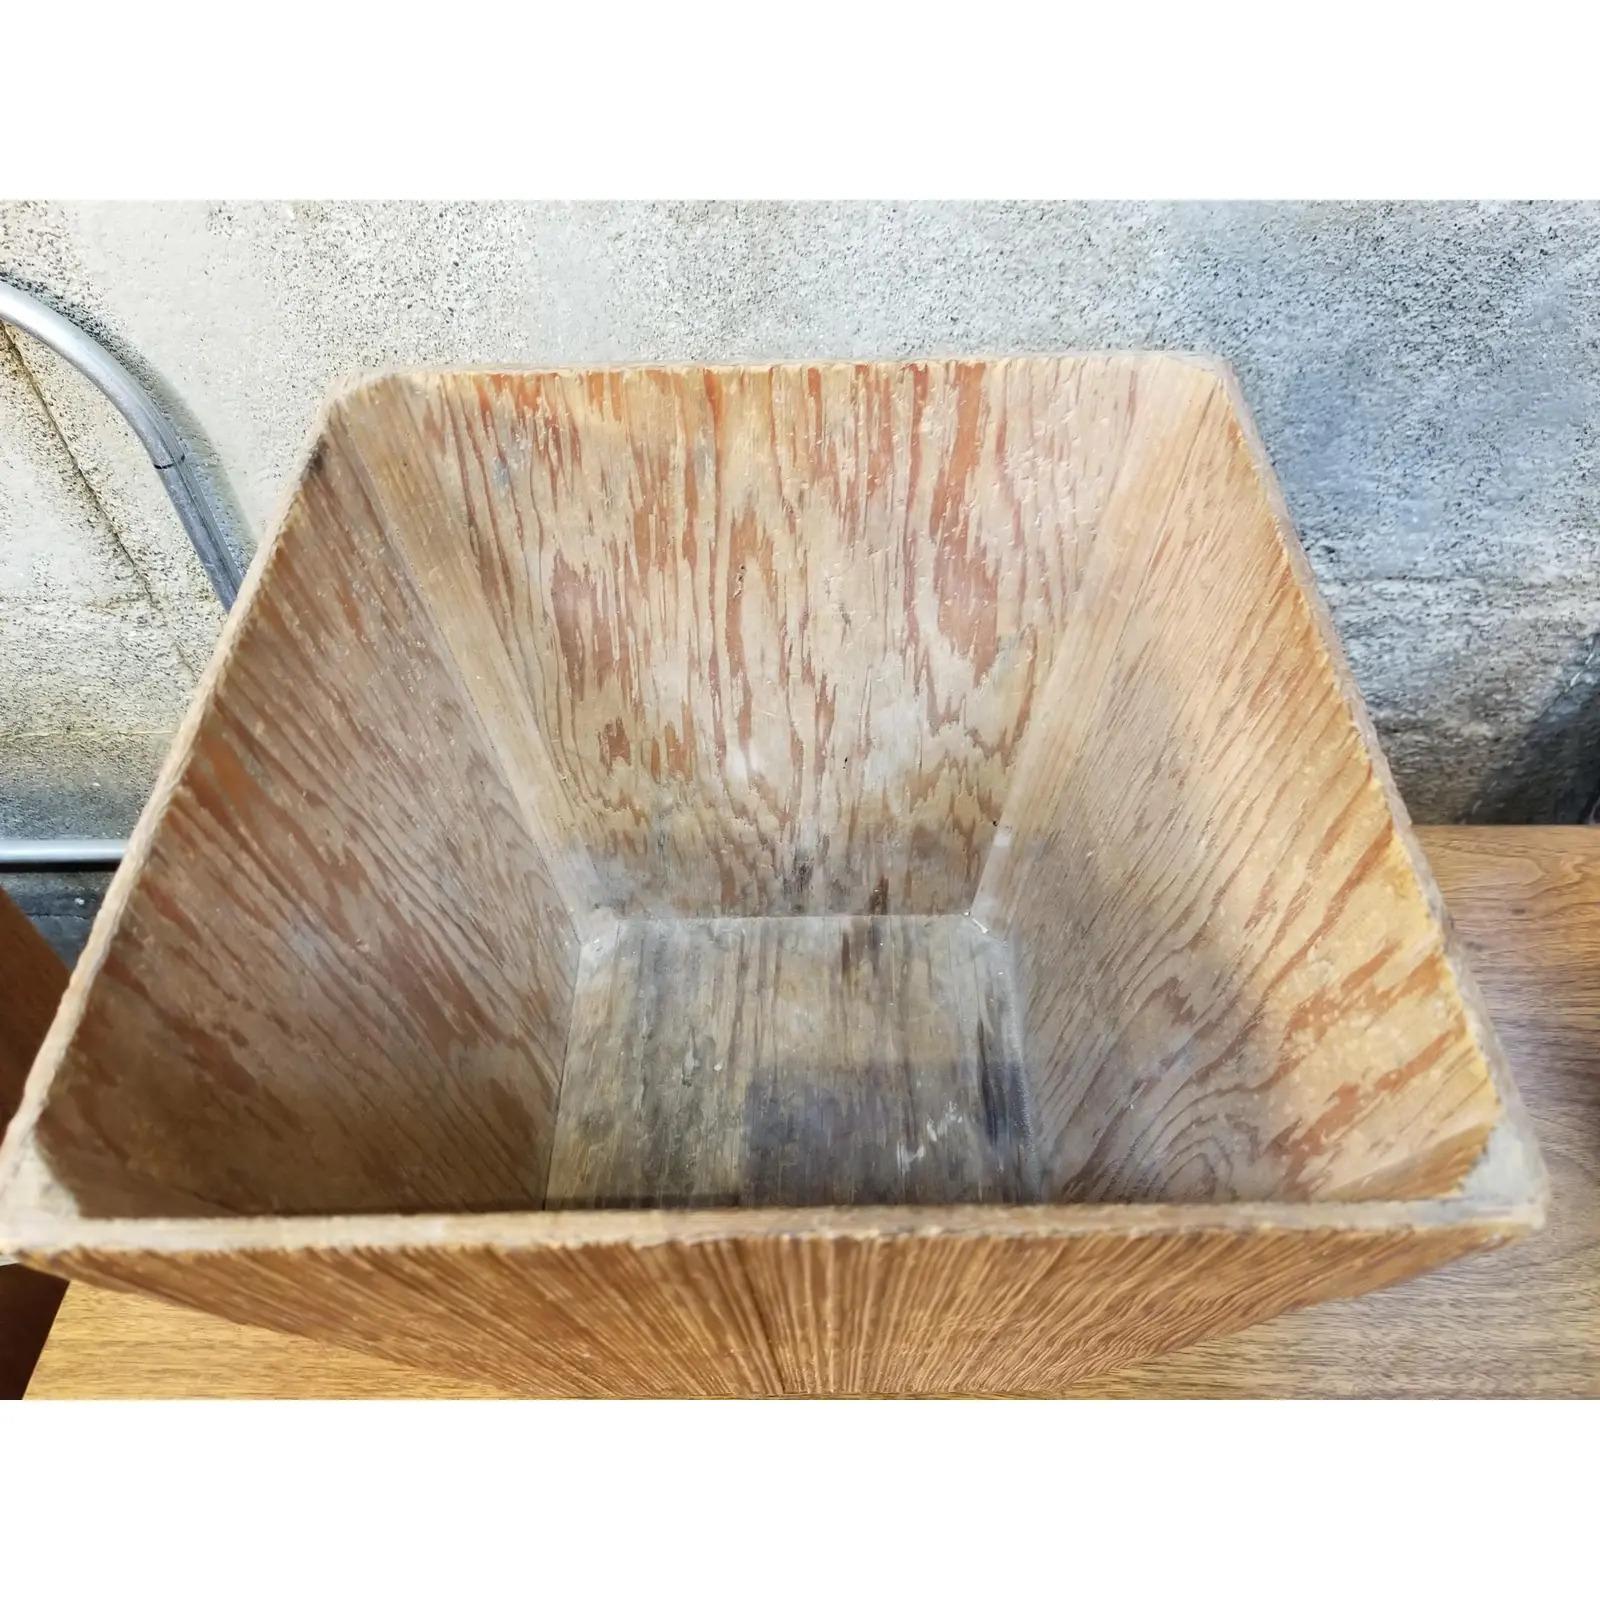 Wood Paul Frankl Attributed Waste Basket For Sale